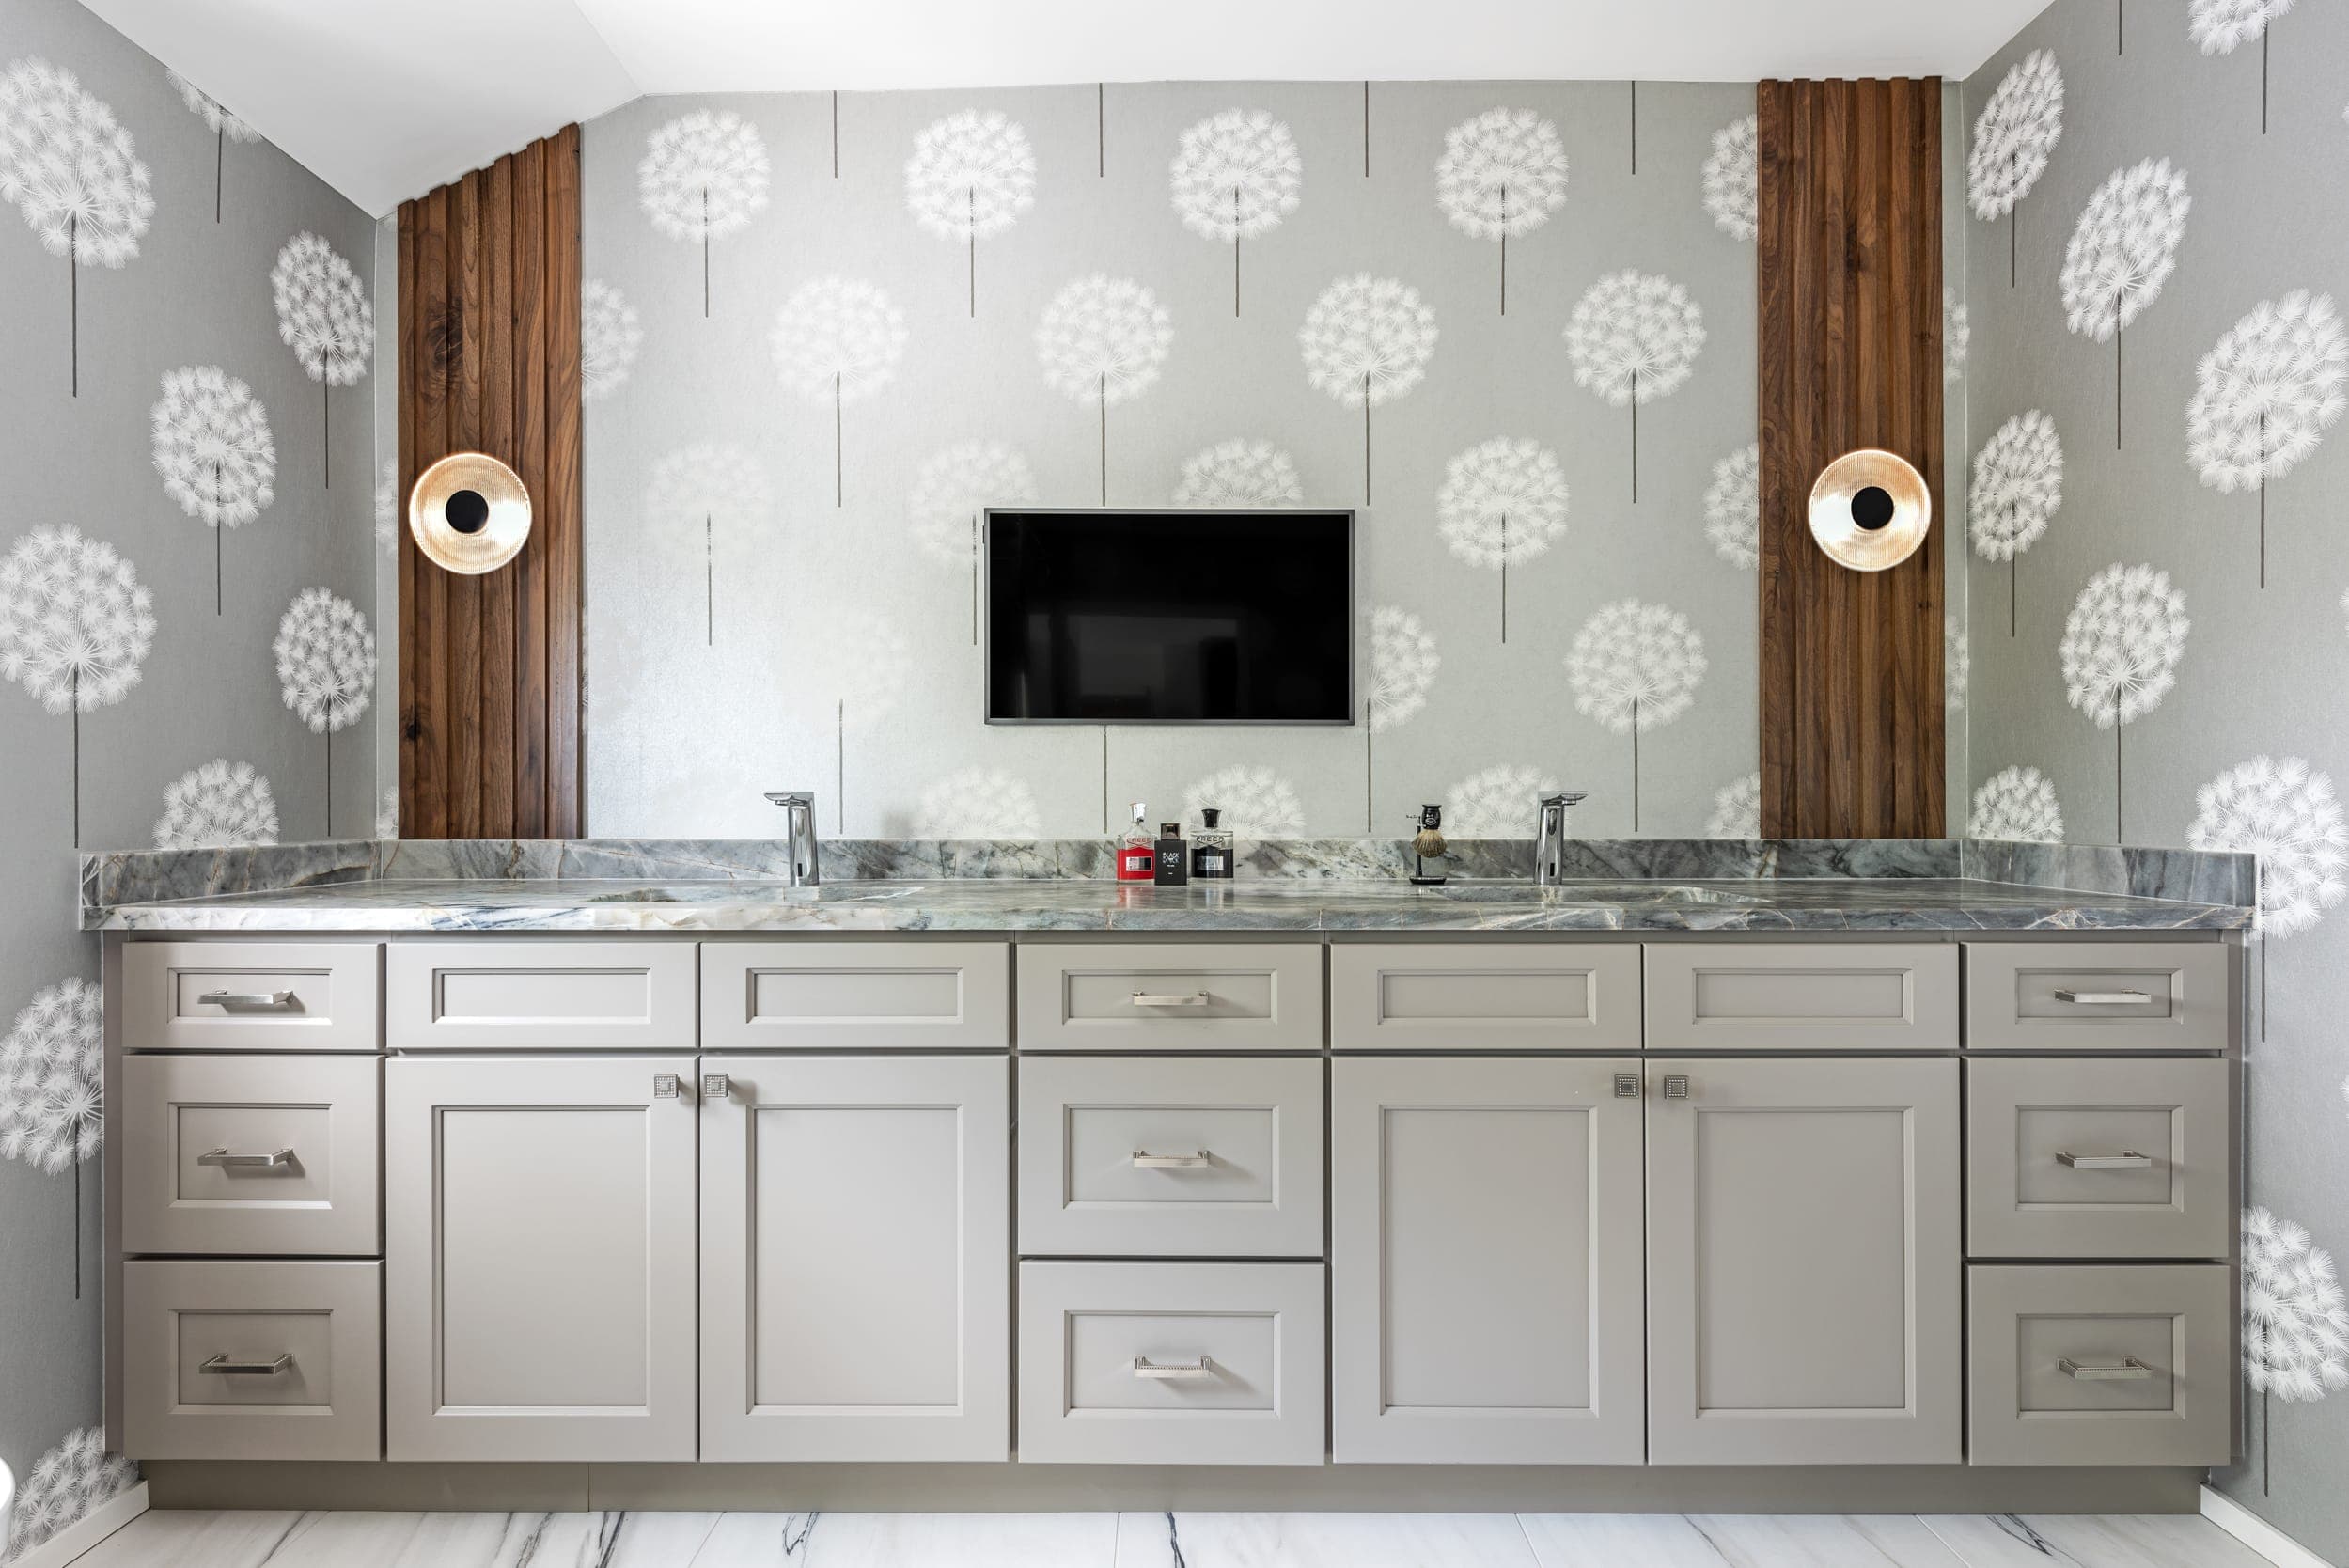 Dandelion Silver Wall Paper Grey Bathroom Cabinets Draws Blue Marble Countertop